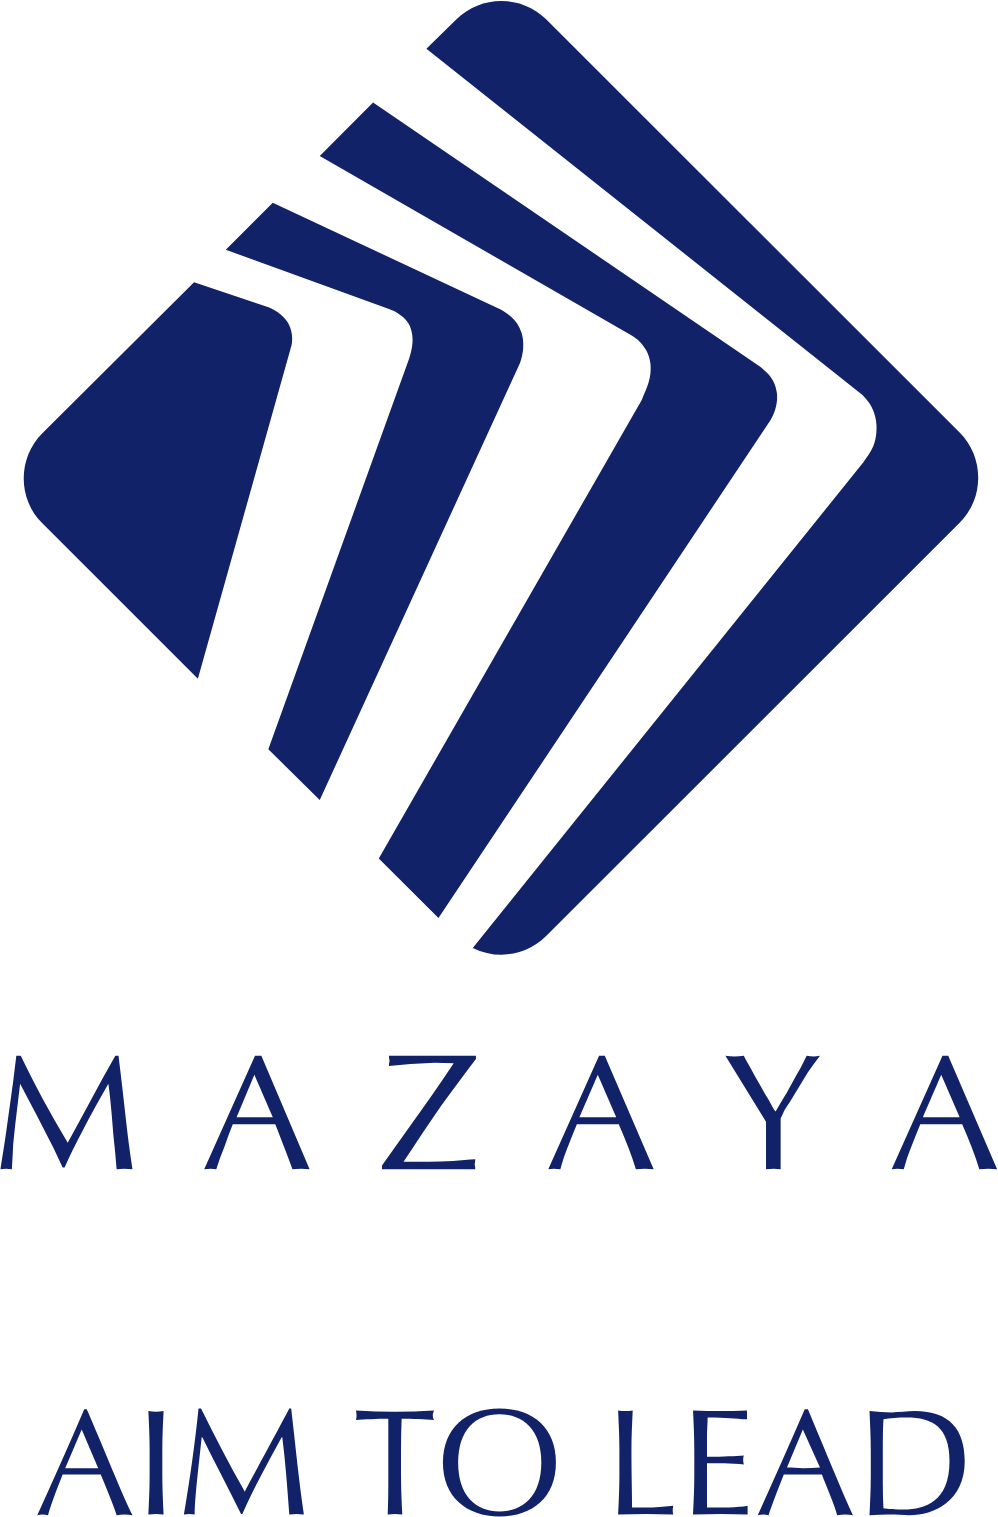 Al-Mazaya Holding Company logo large (transparent PNG)